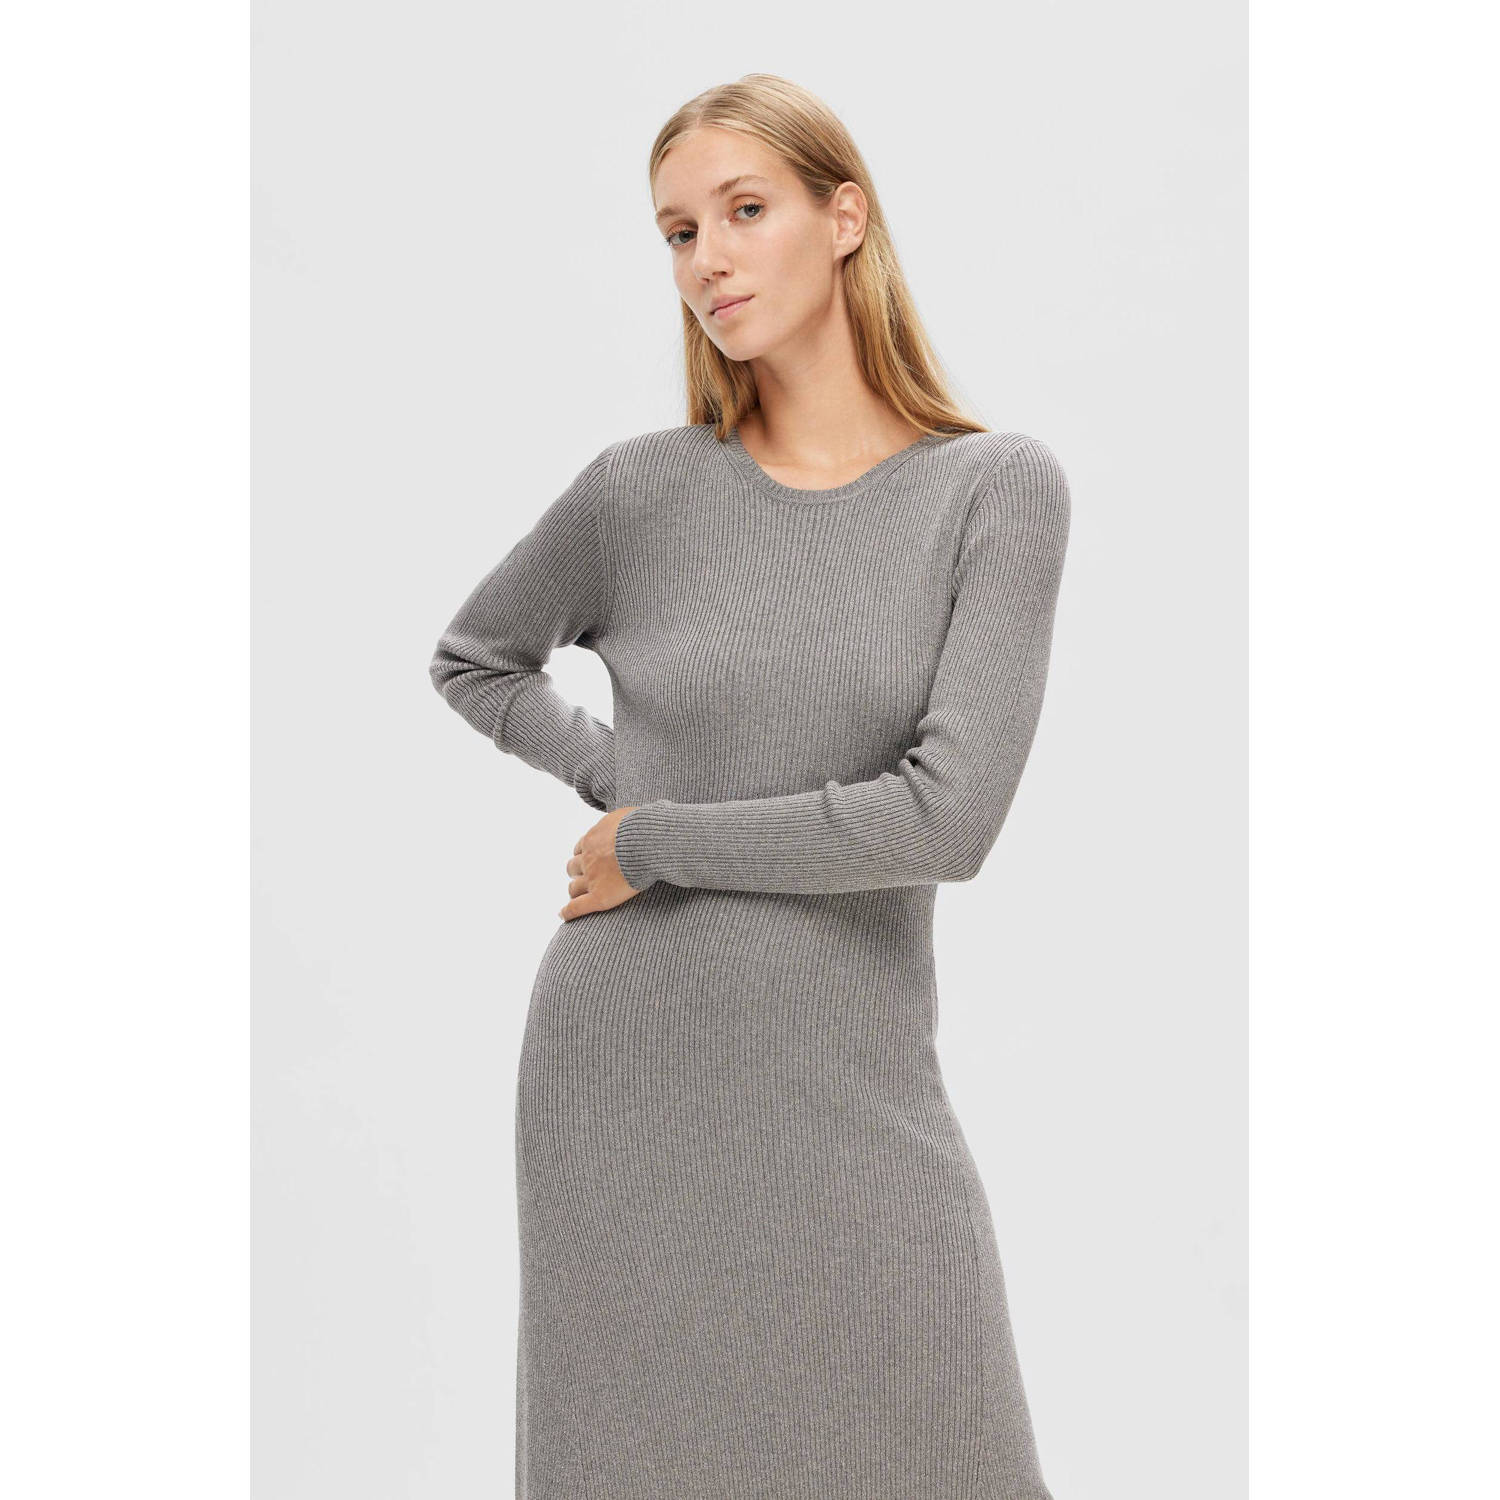 SELECTED FEMME ribgebreide jurk SLFLURA grijs